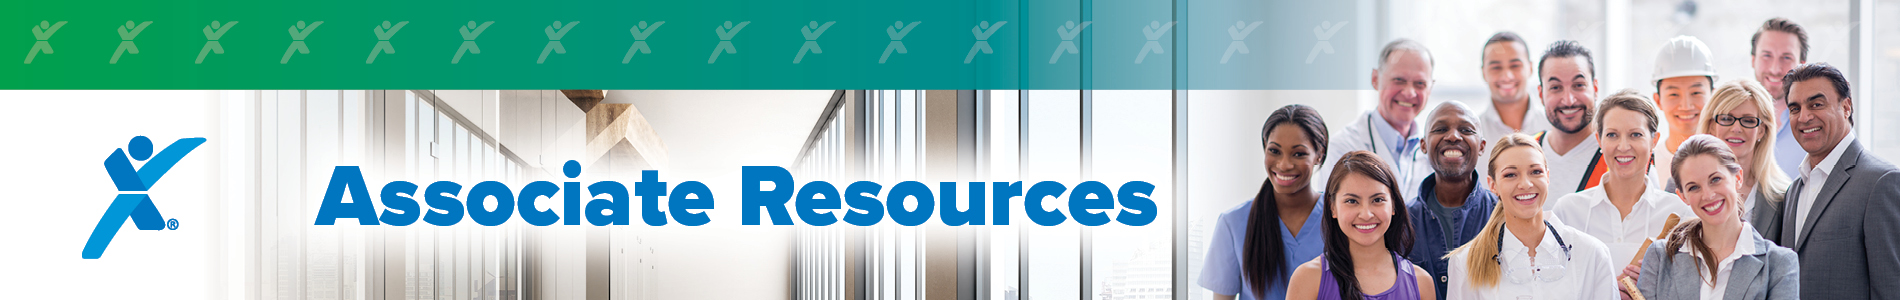 Associate-Resources-Interior-banner